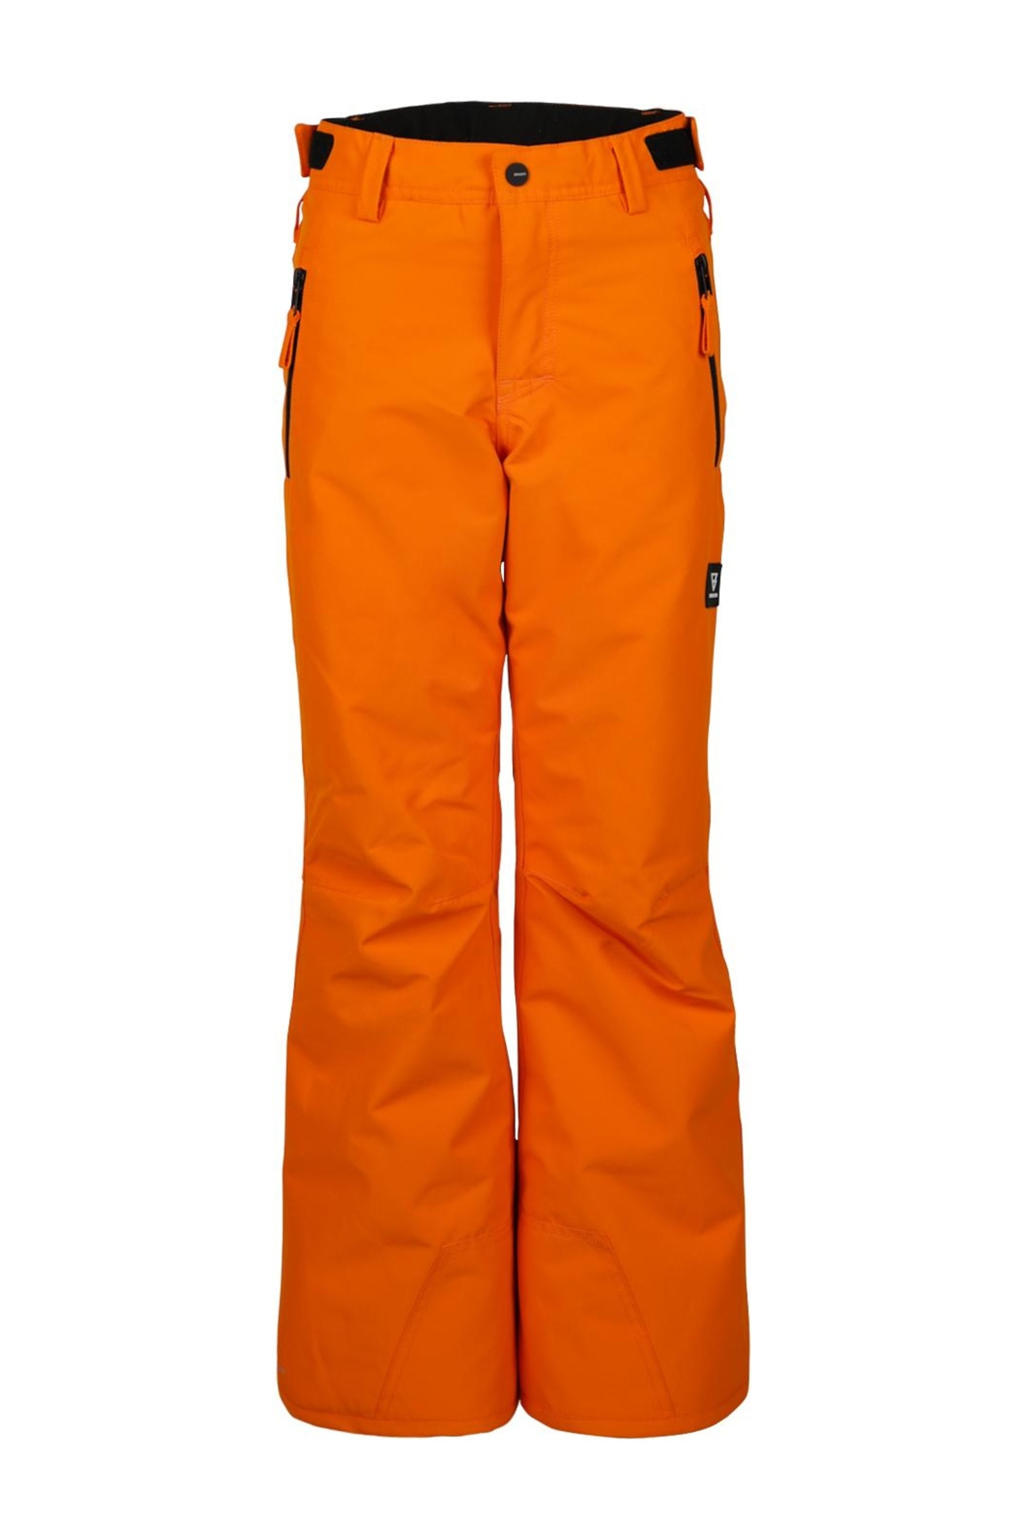 Brunotti skibroek Footraily oranje